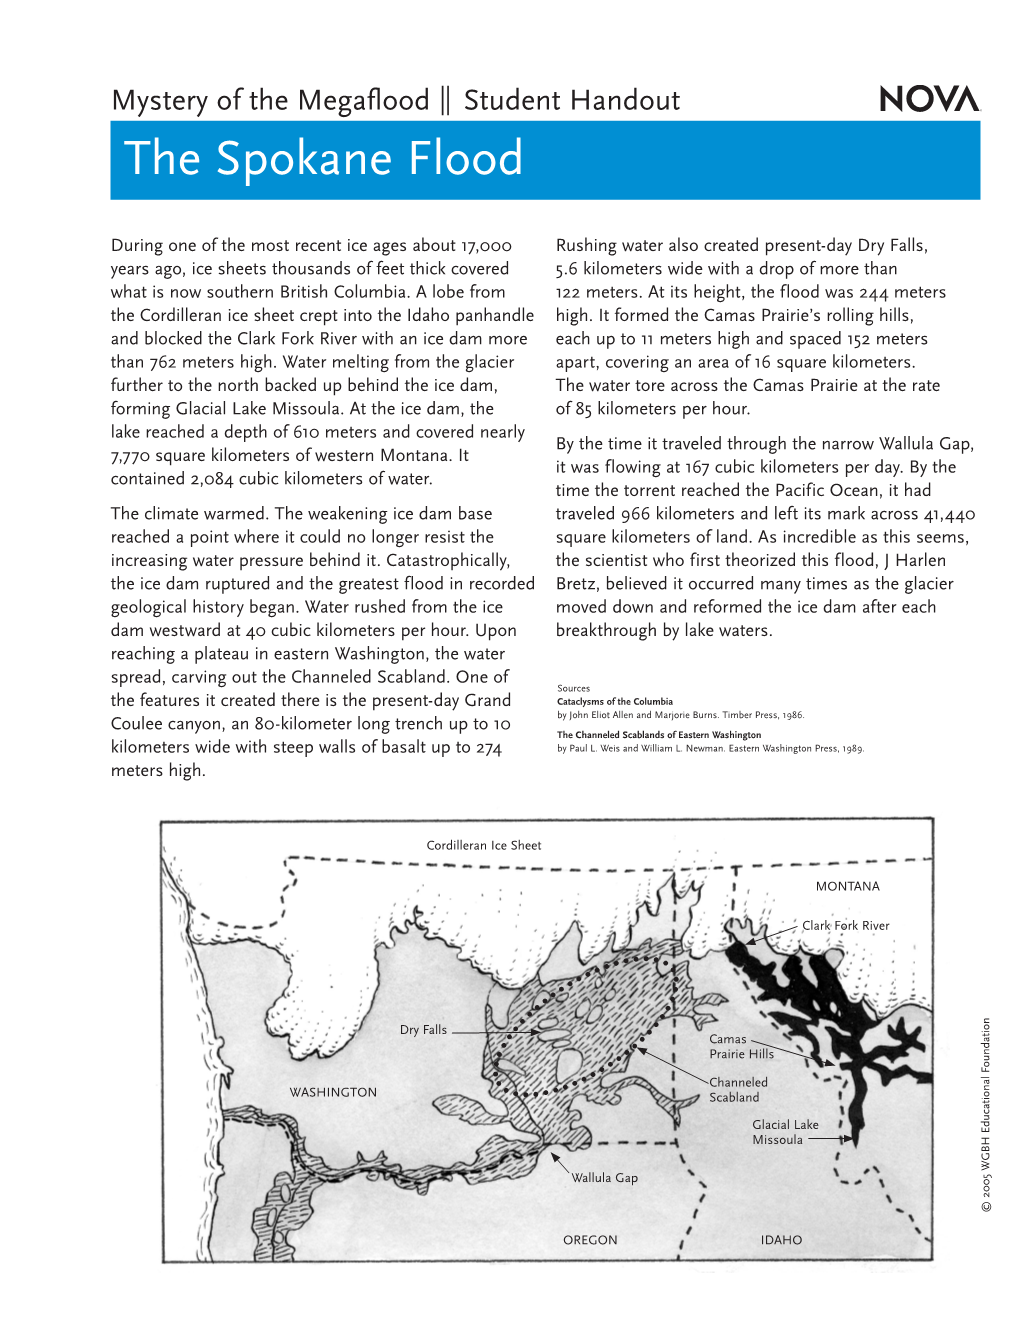 The Spokane Flood